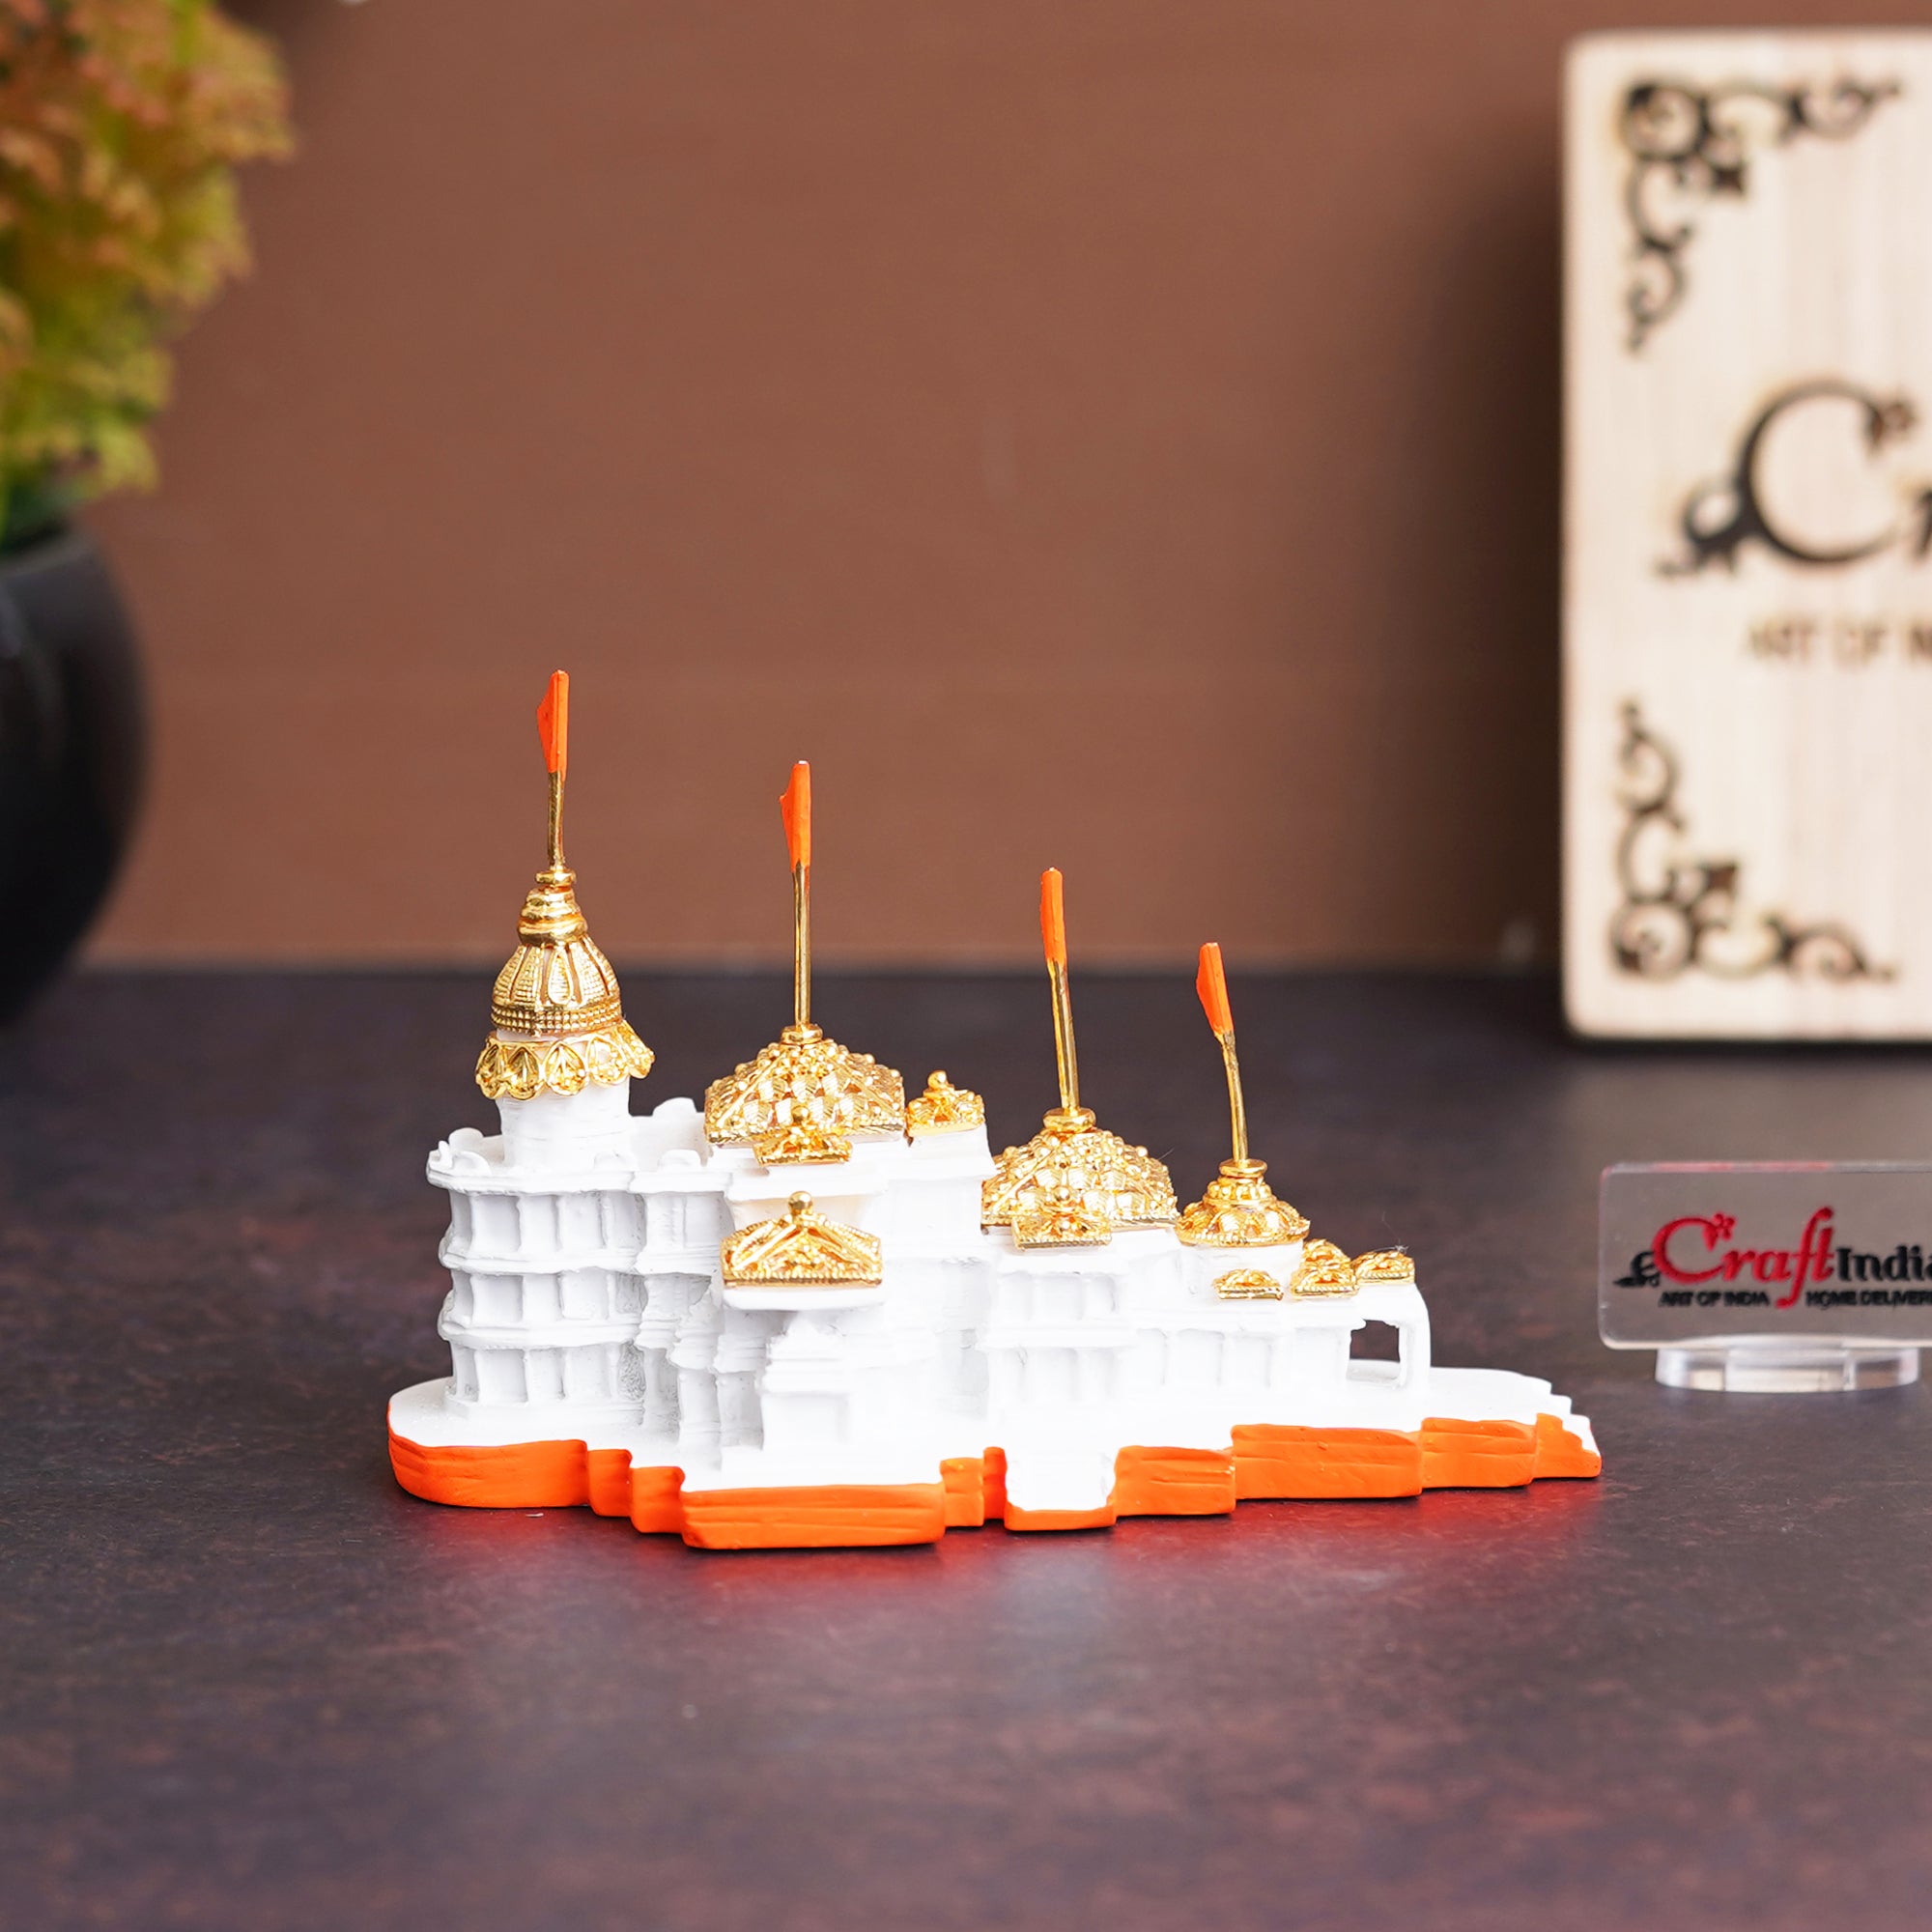 eCraftIndia Shri Ram Mandir Ayodhya Model Authentic Design - Perfect for Home Temple, Decor, and Spiritual Gifting (White, Gold, Orange)